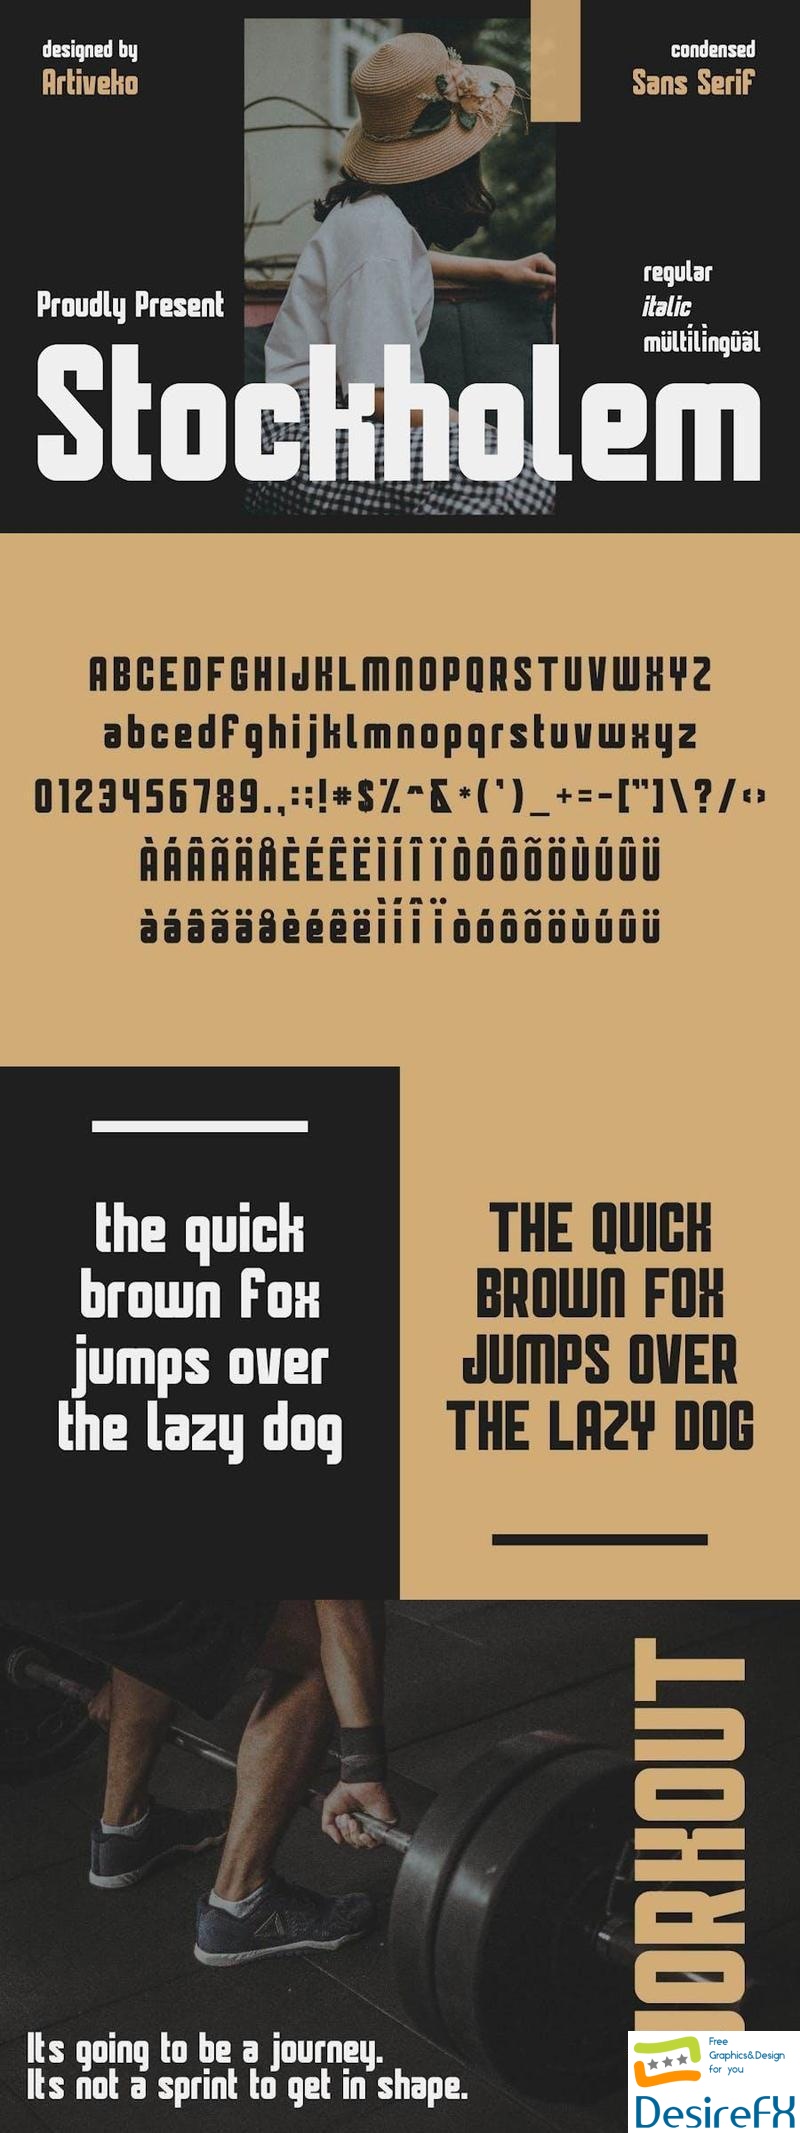 Stockholem Condensed Font MEXFGGD